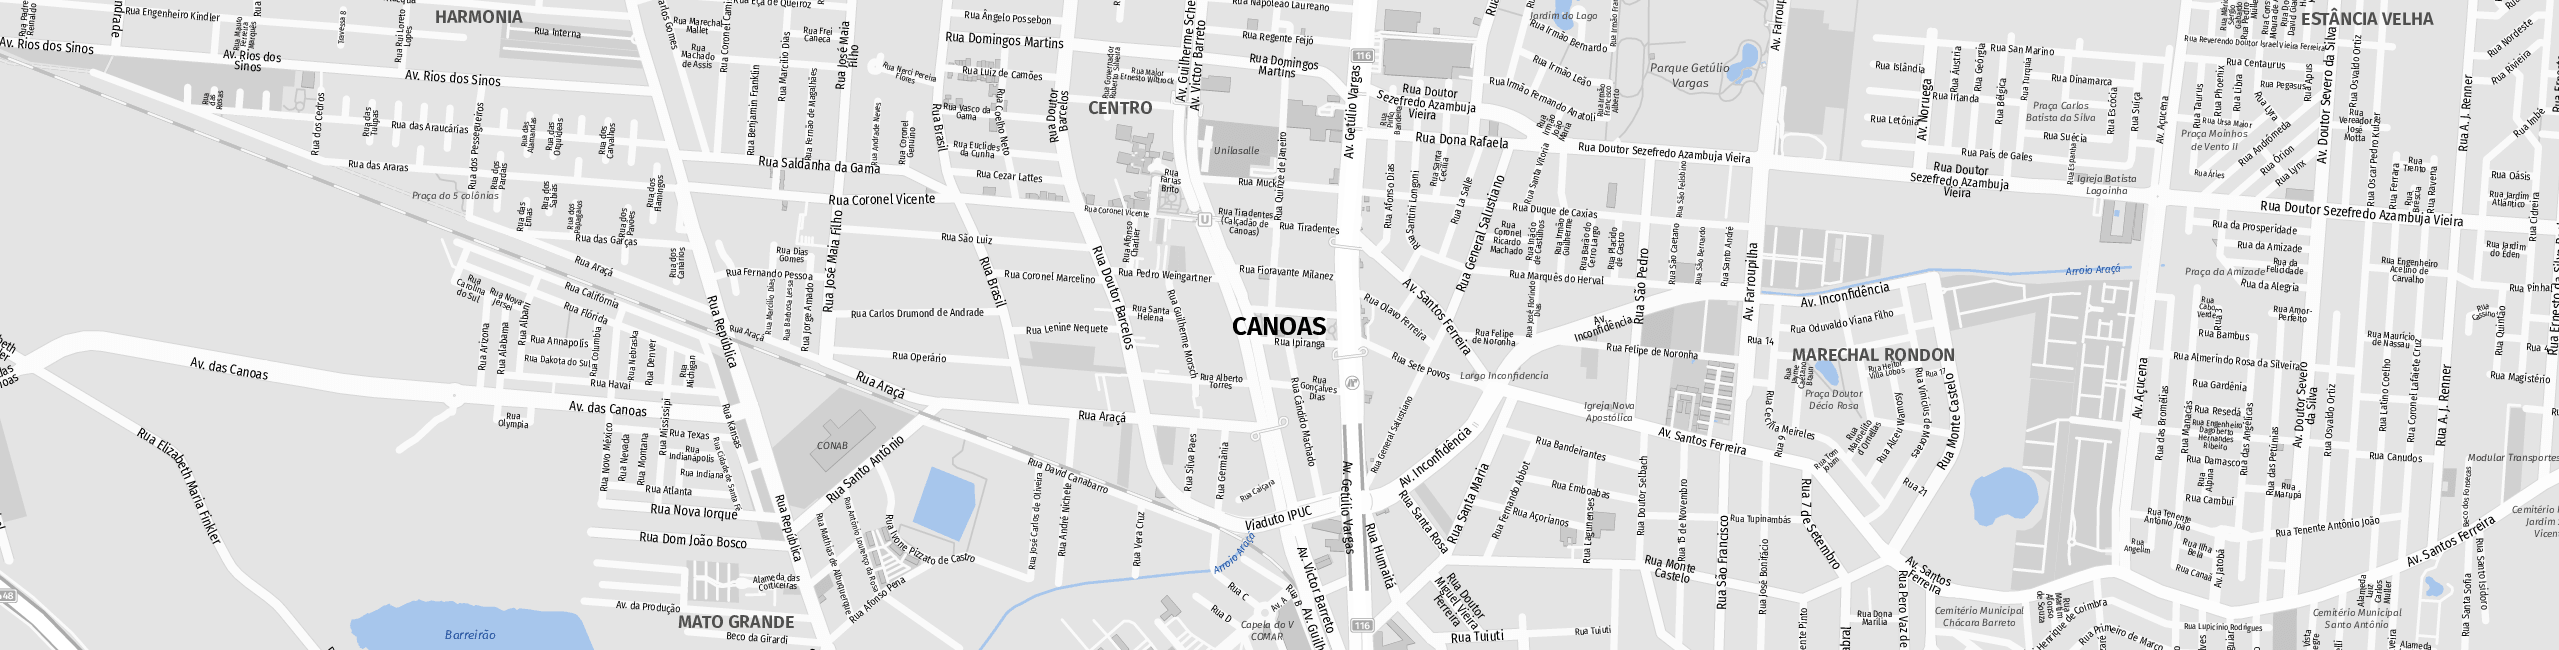 Stadtplan Canoas zum Downloaden.